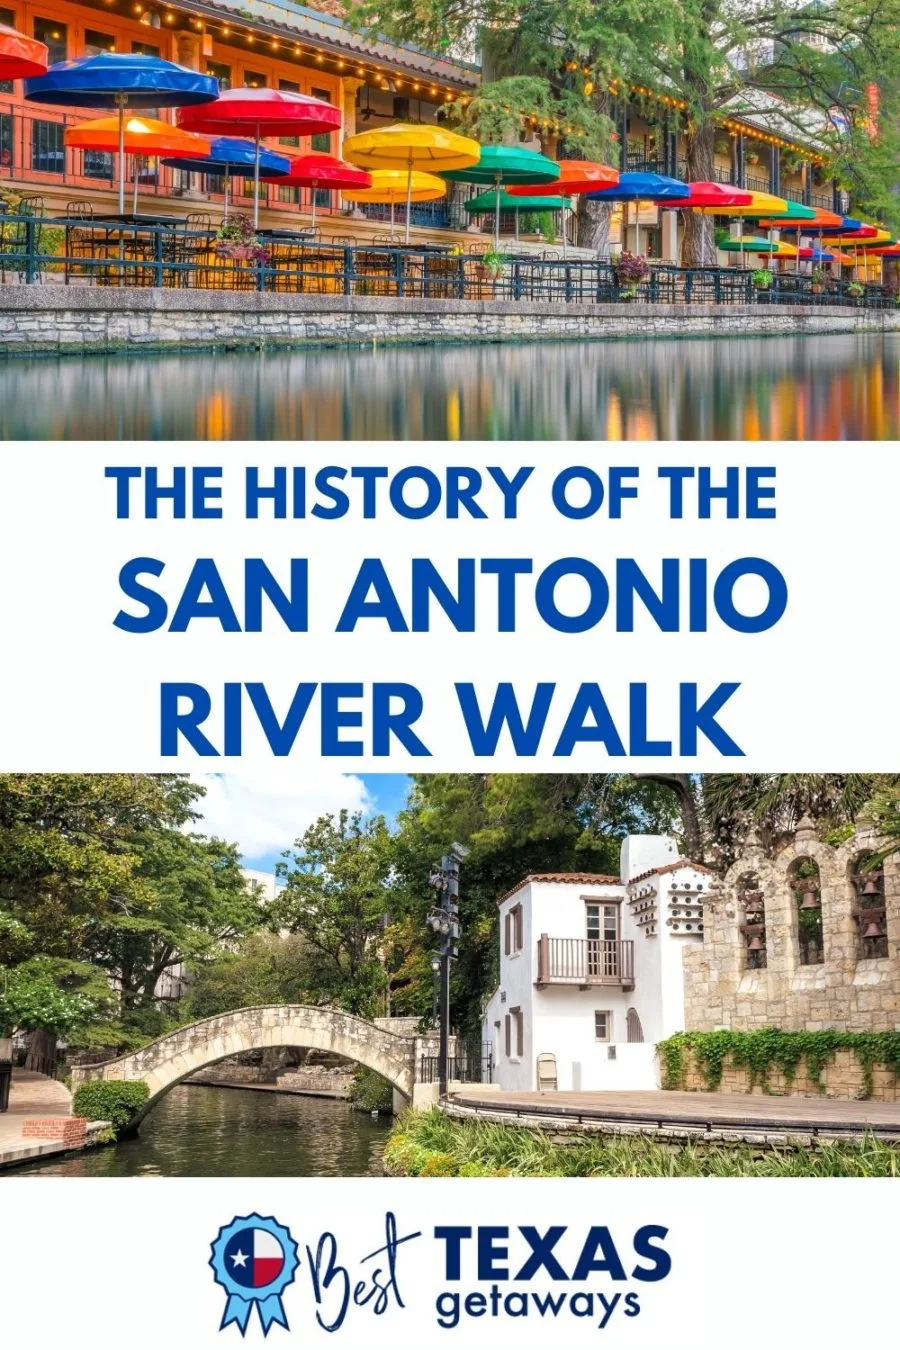 HISTORY OF THE SAN ANTONIO RIVER WALK